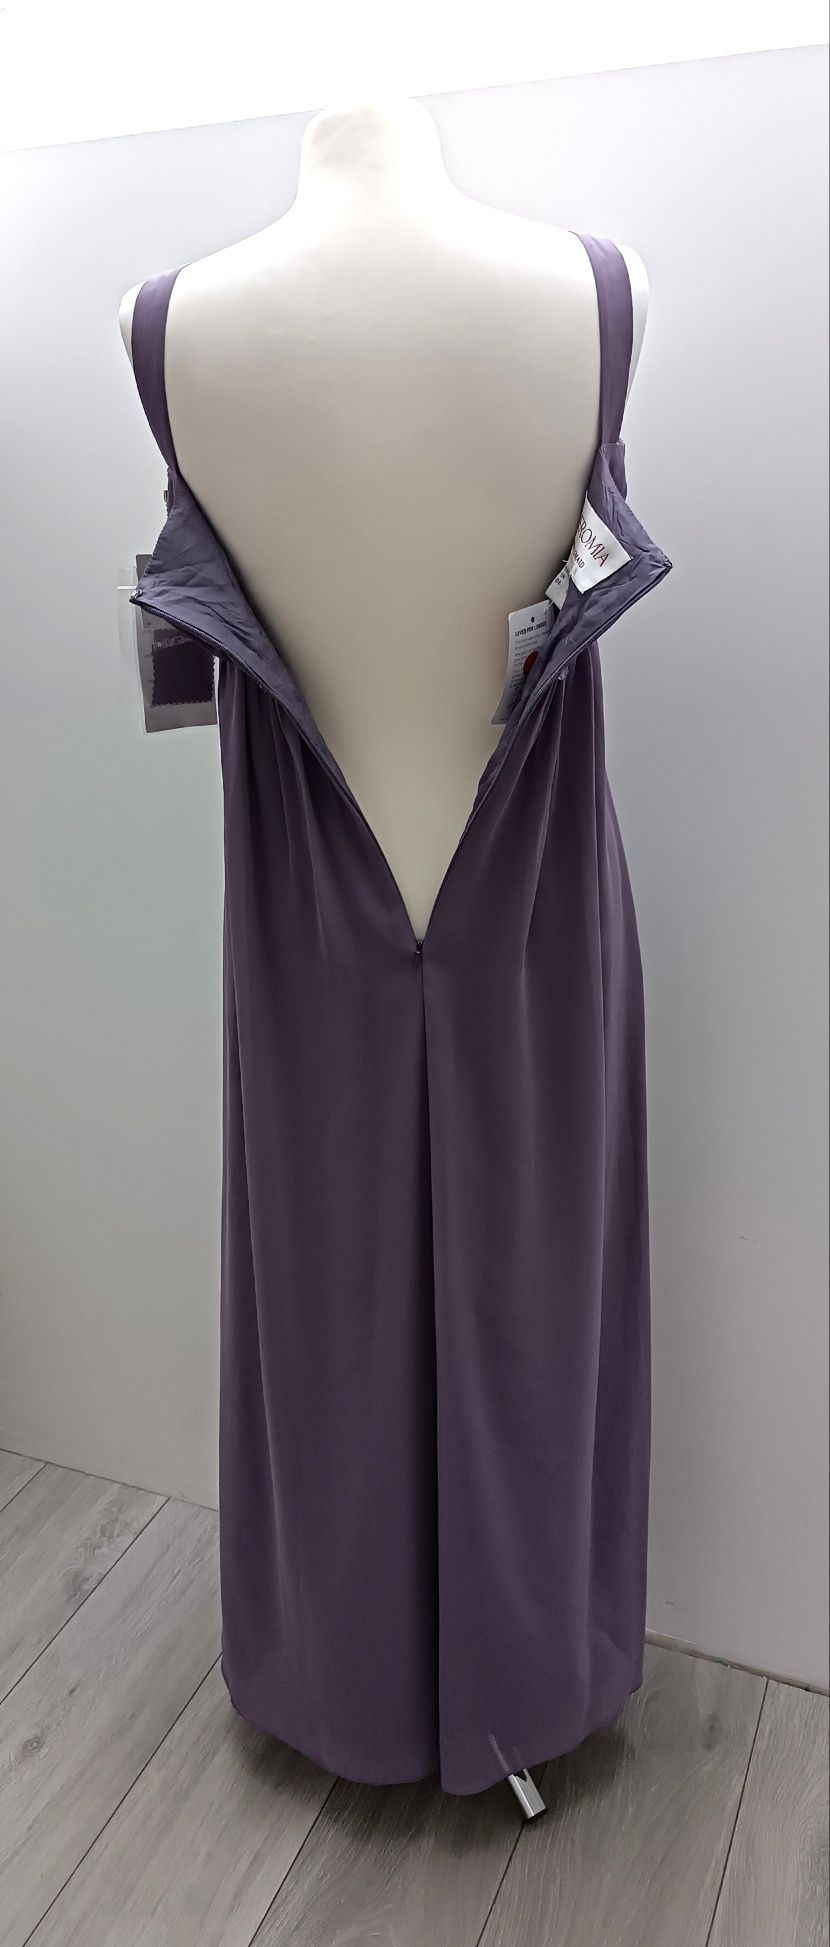 Nowa suknia sukienka maxi długa XS S 34 36 tiulowa fioletowa